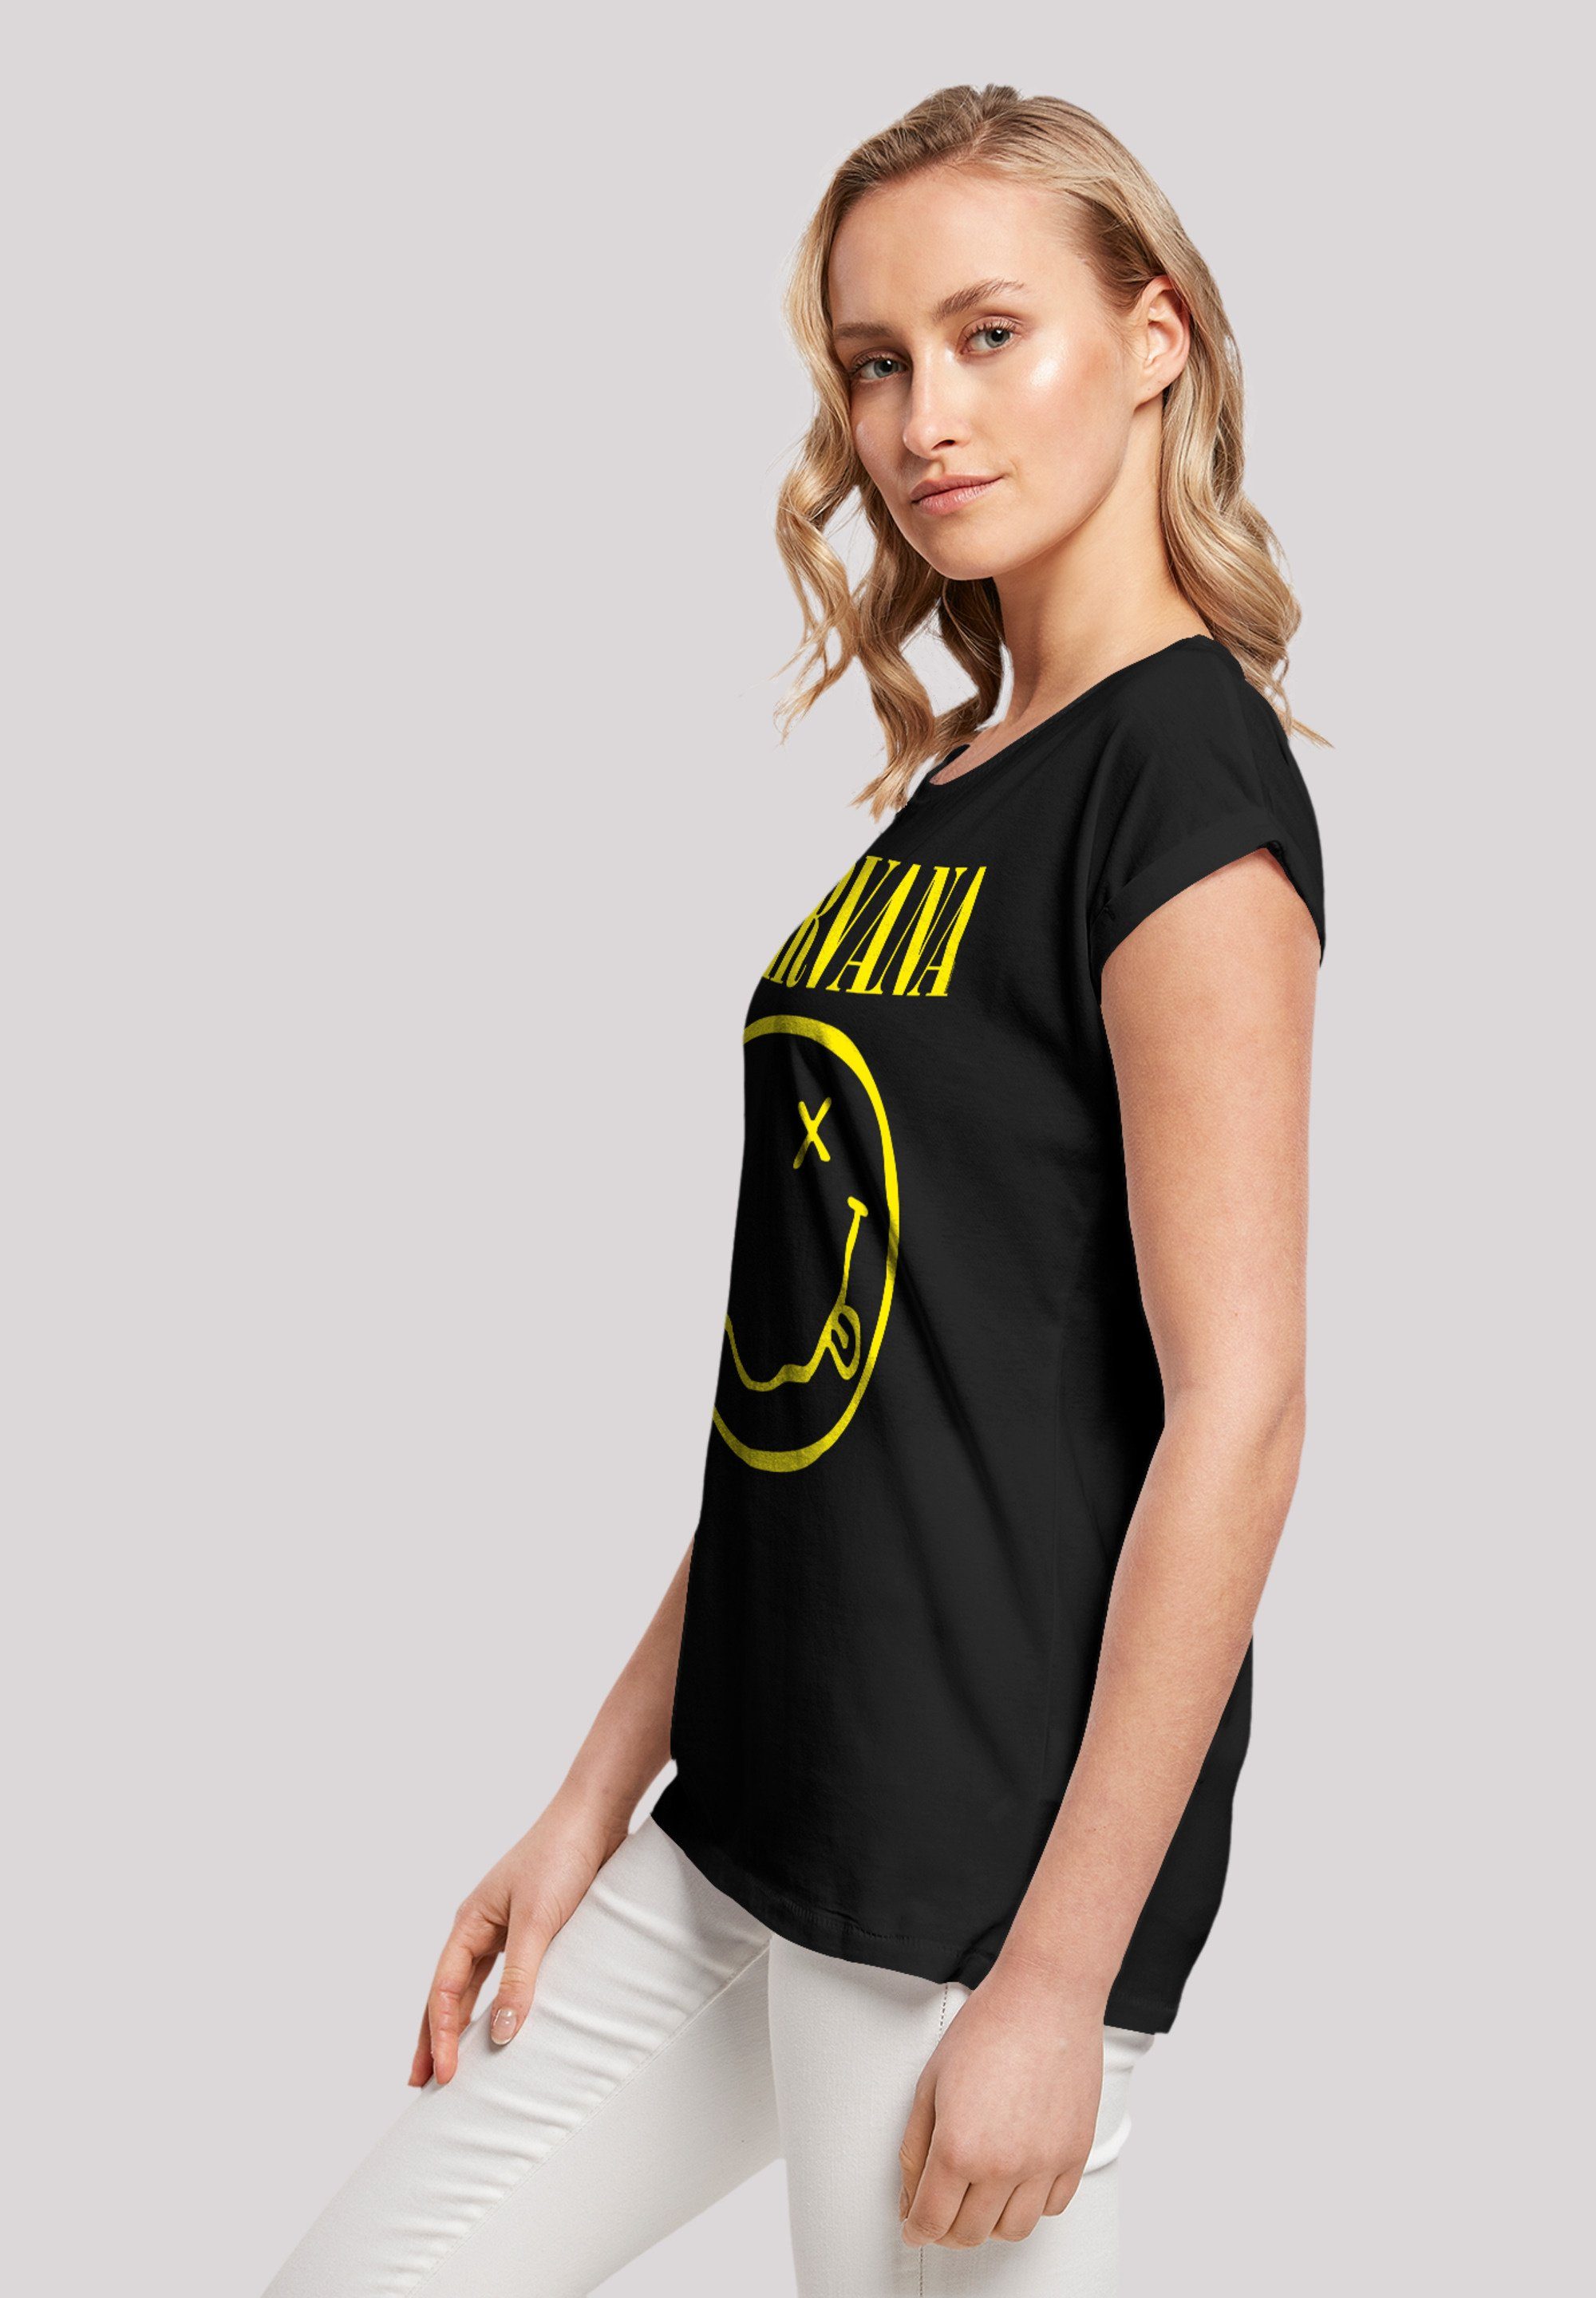 Nirvana F4NT4STIC Yellow Happy Qualität T-Shirt Rock Band Face Premium schwarz